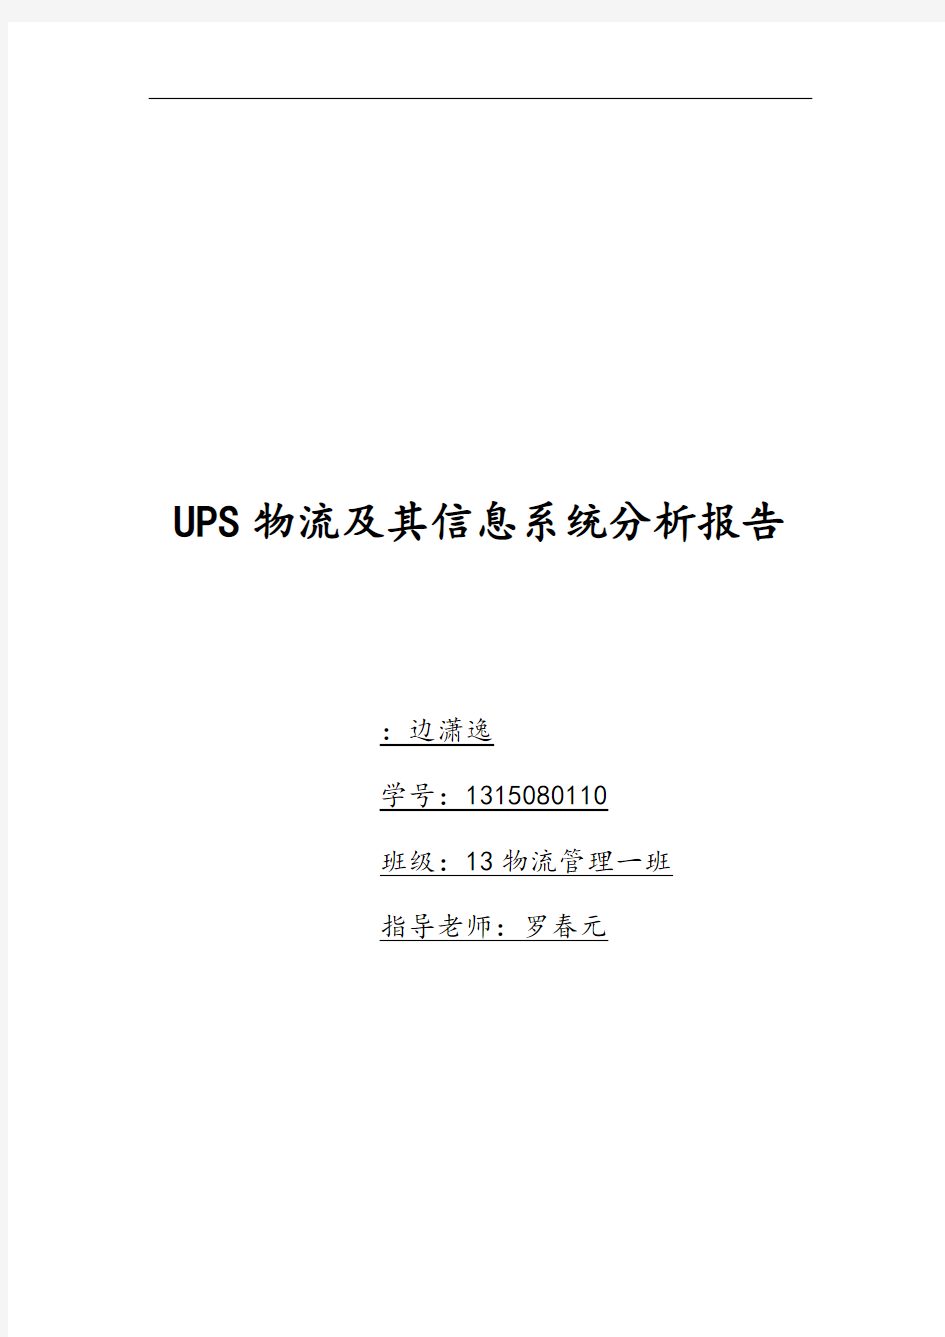 UPS物流及其信息系统分析资料报告资料报告材料